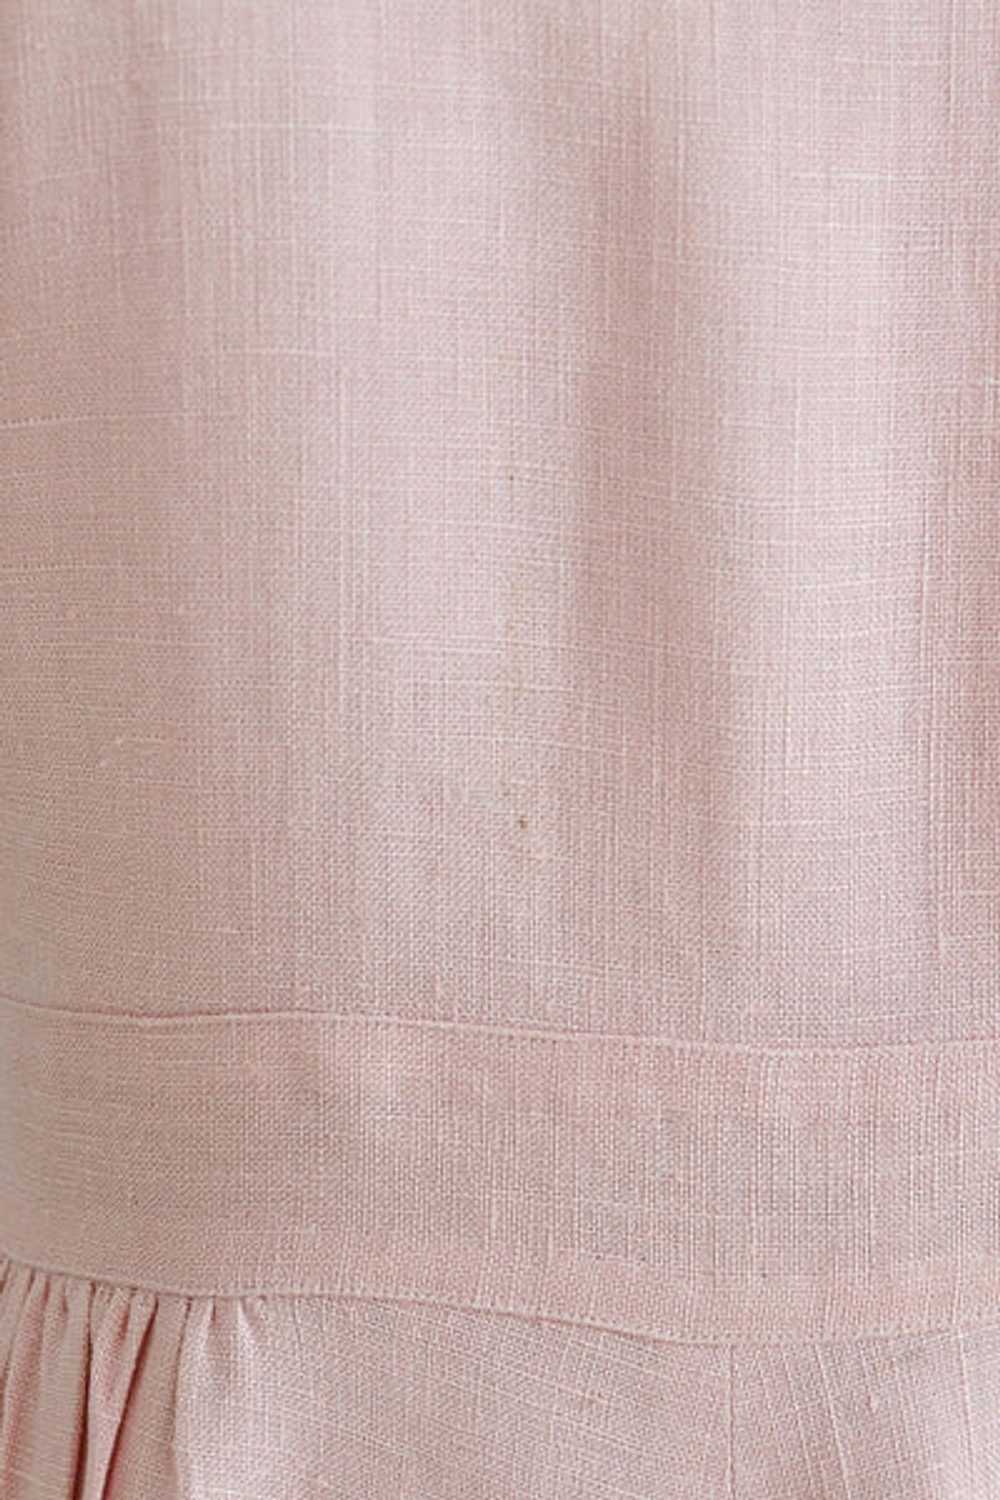 Pink Linen Dress / S - image 6